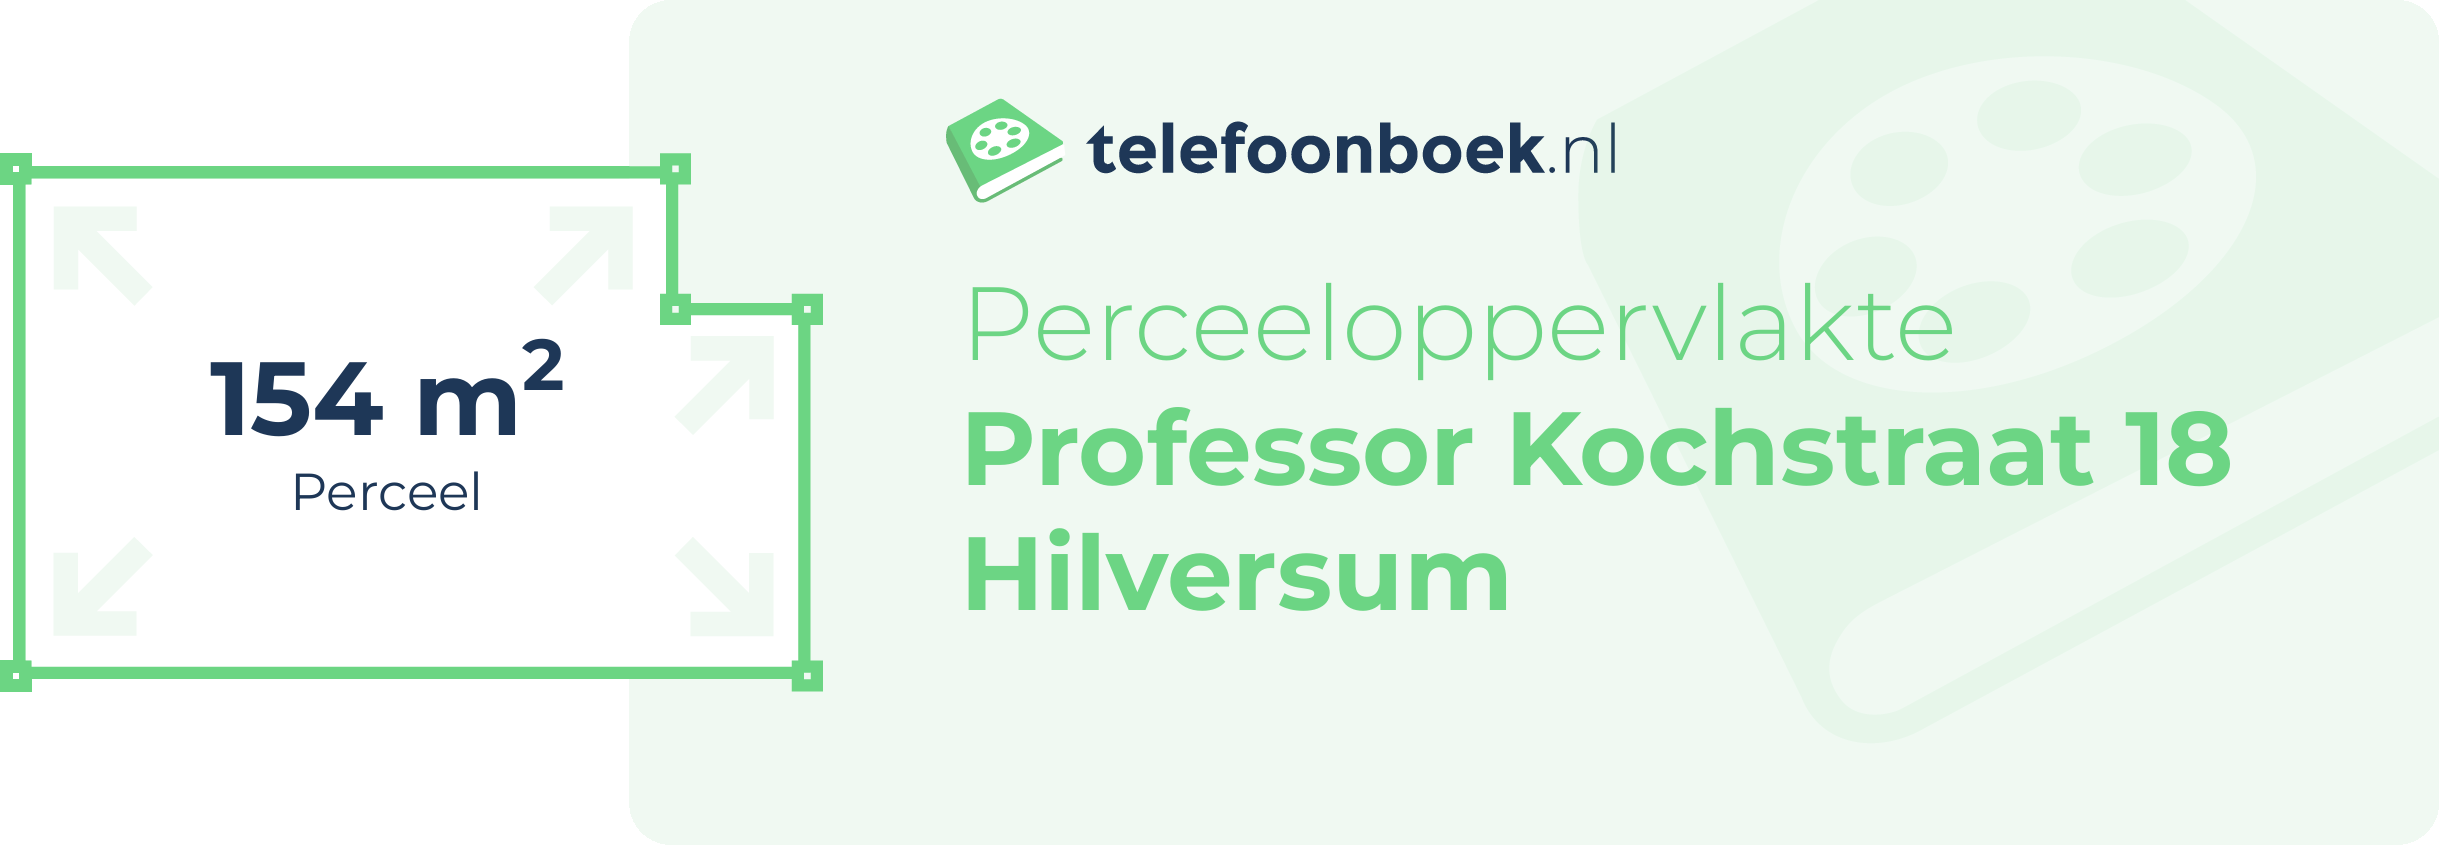 Perceeloppervlakte Professor Kochstraat 18 Hilversum